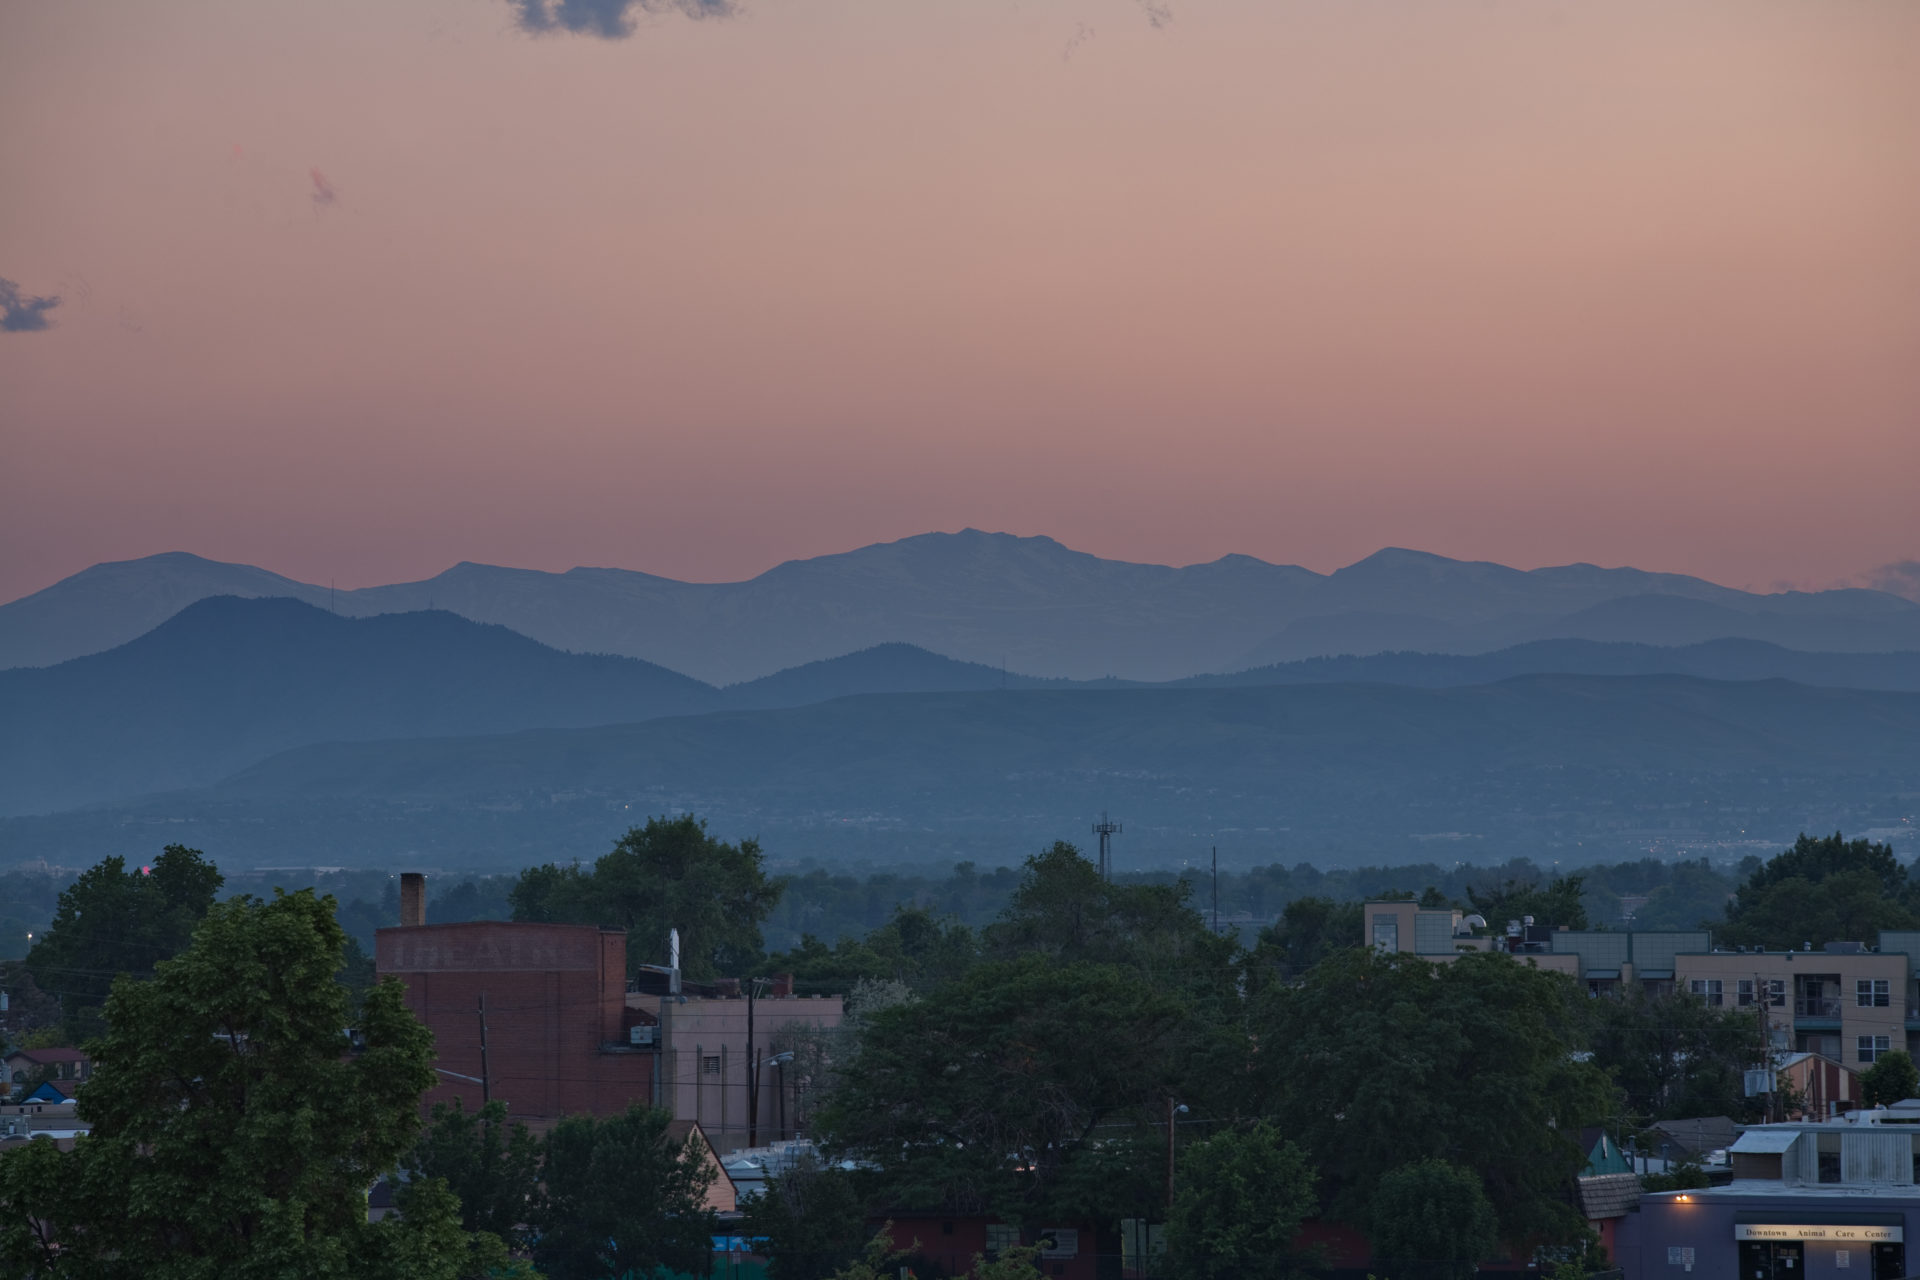 Mount Evans sunset - June 11, 2011